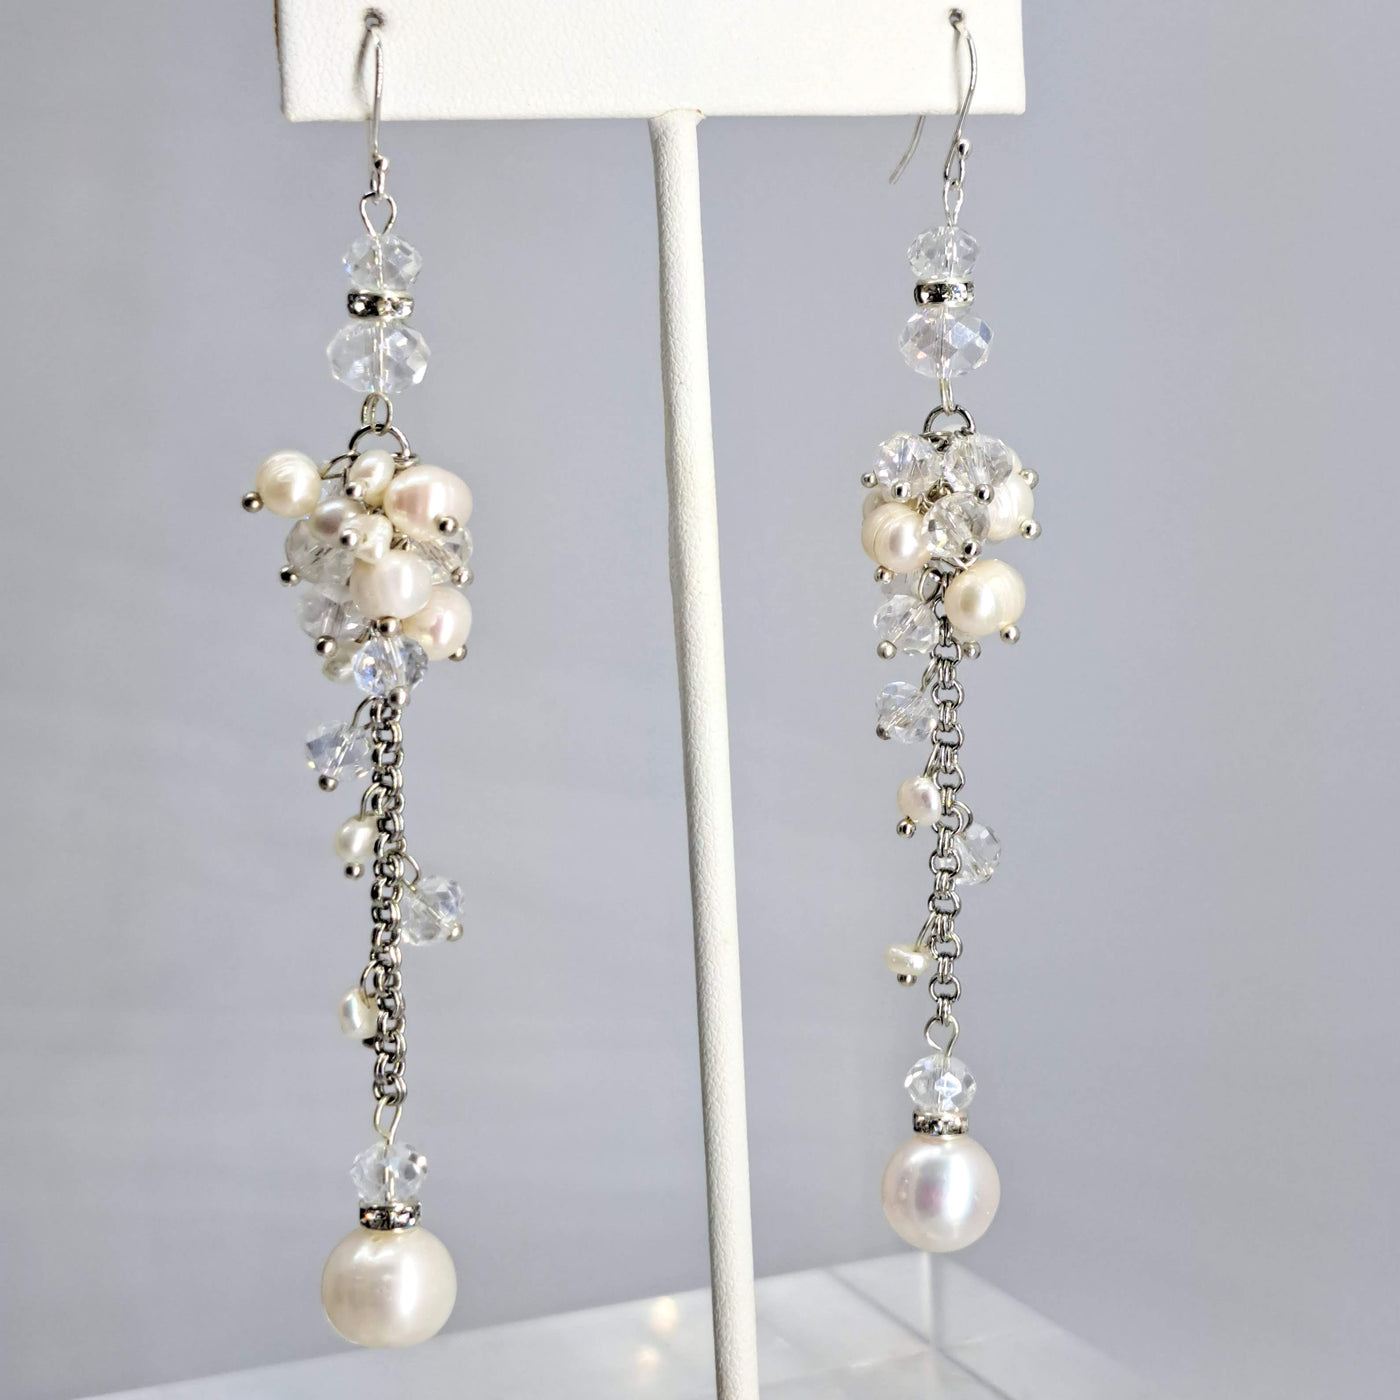 "Sparkle-Lotopus!" 4" Earrings - Pearls, Crystals, Sterling